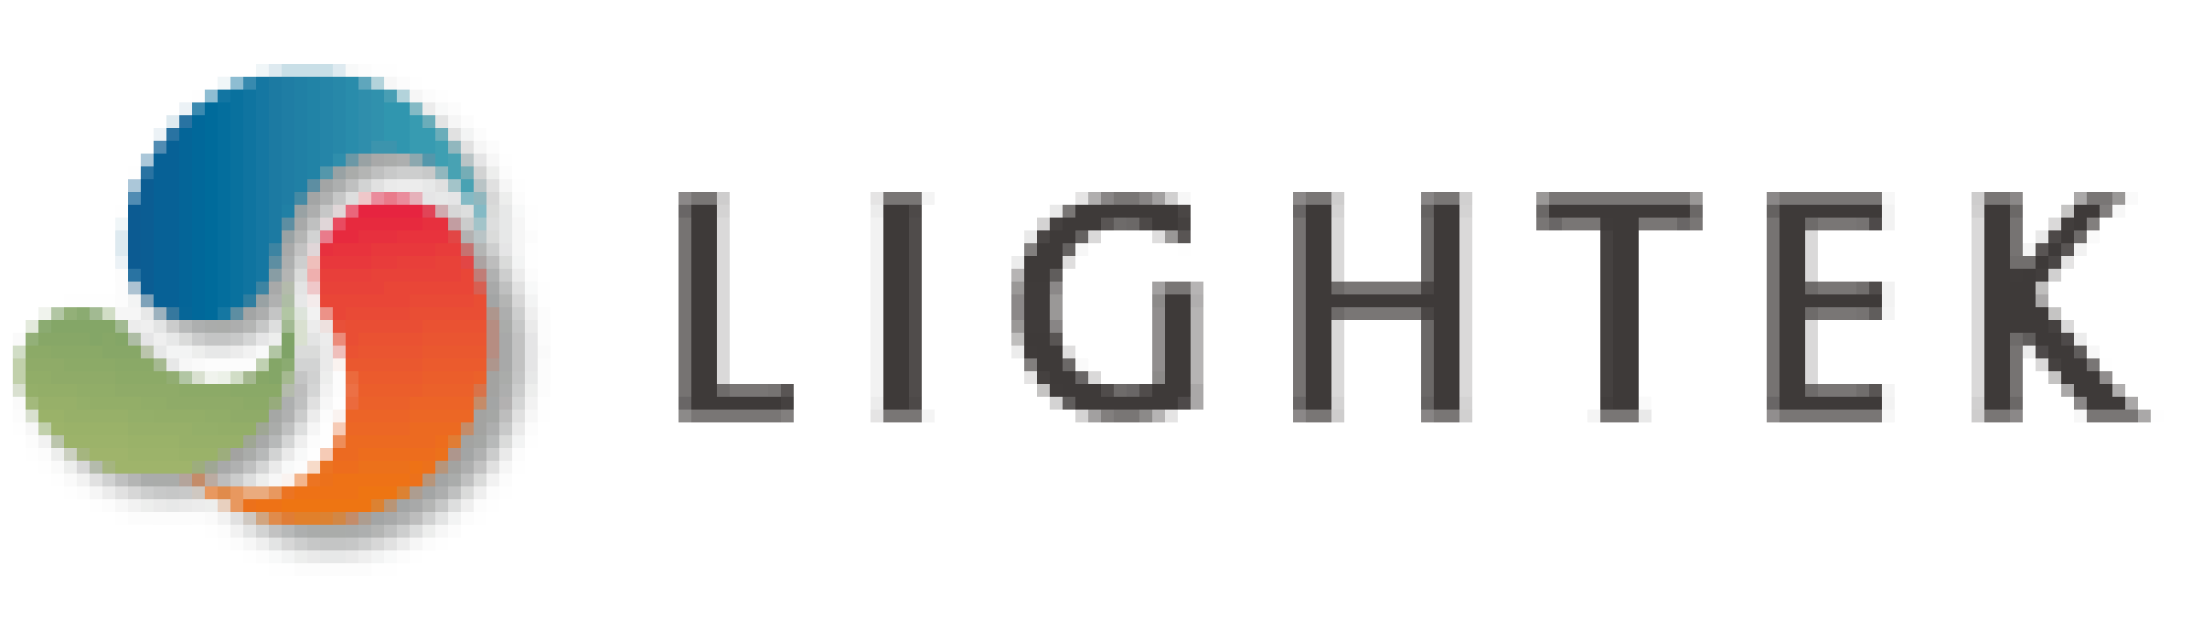 Desktop LED Slim Light Box - Efficient Illumination for Advertising